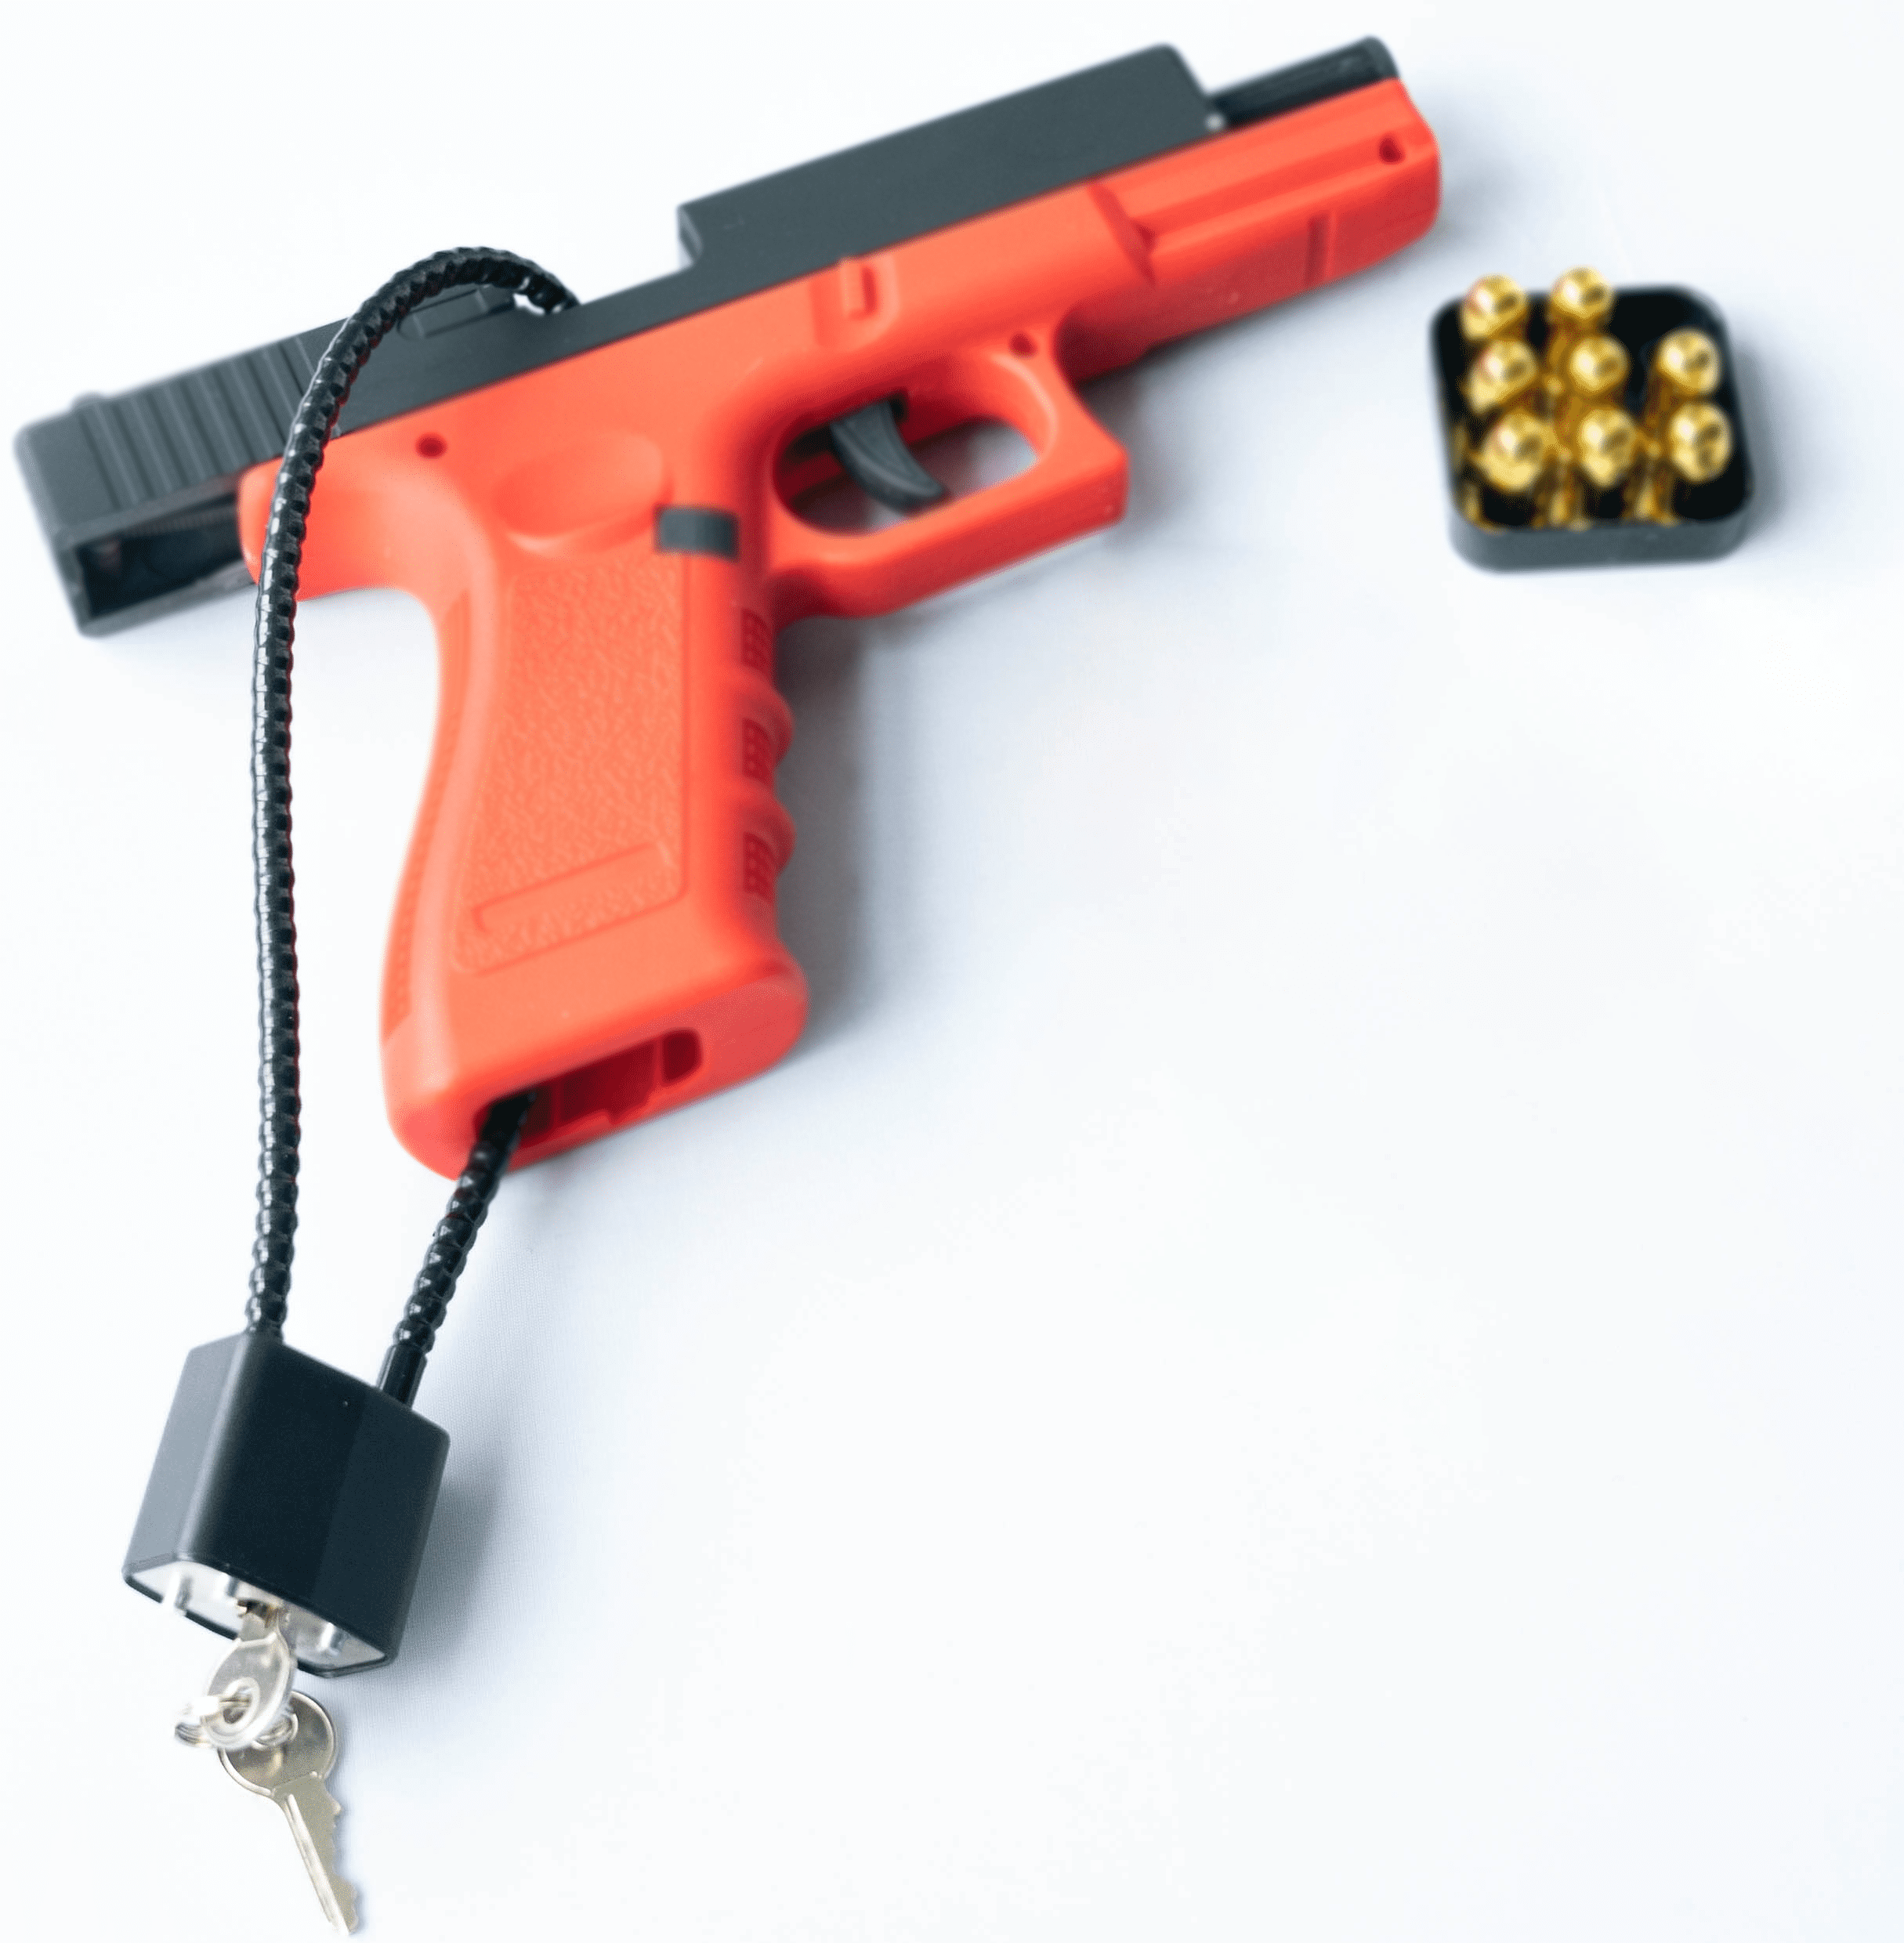 Gun store chats boost use of gun cable locks - Futurity